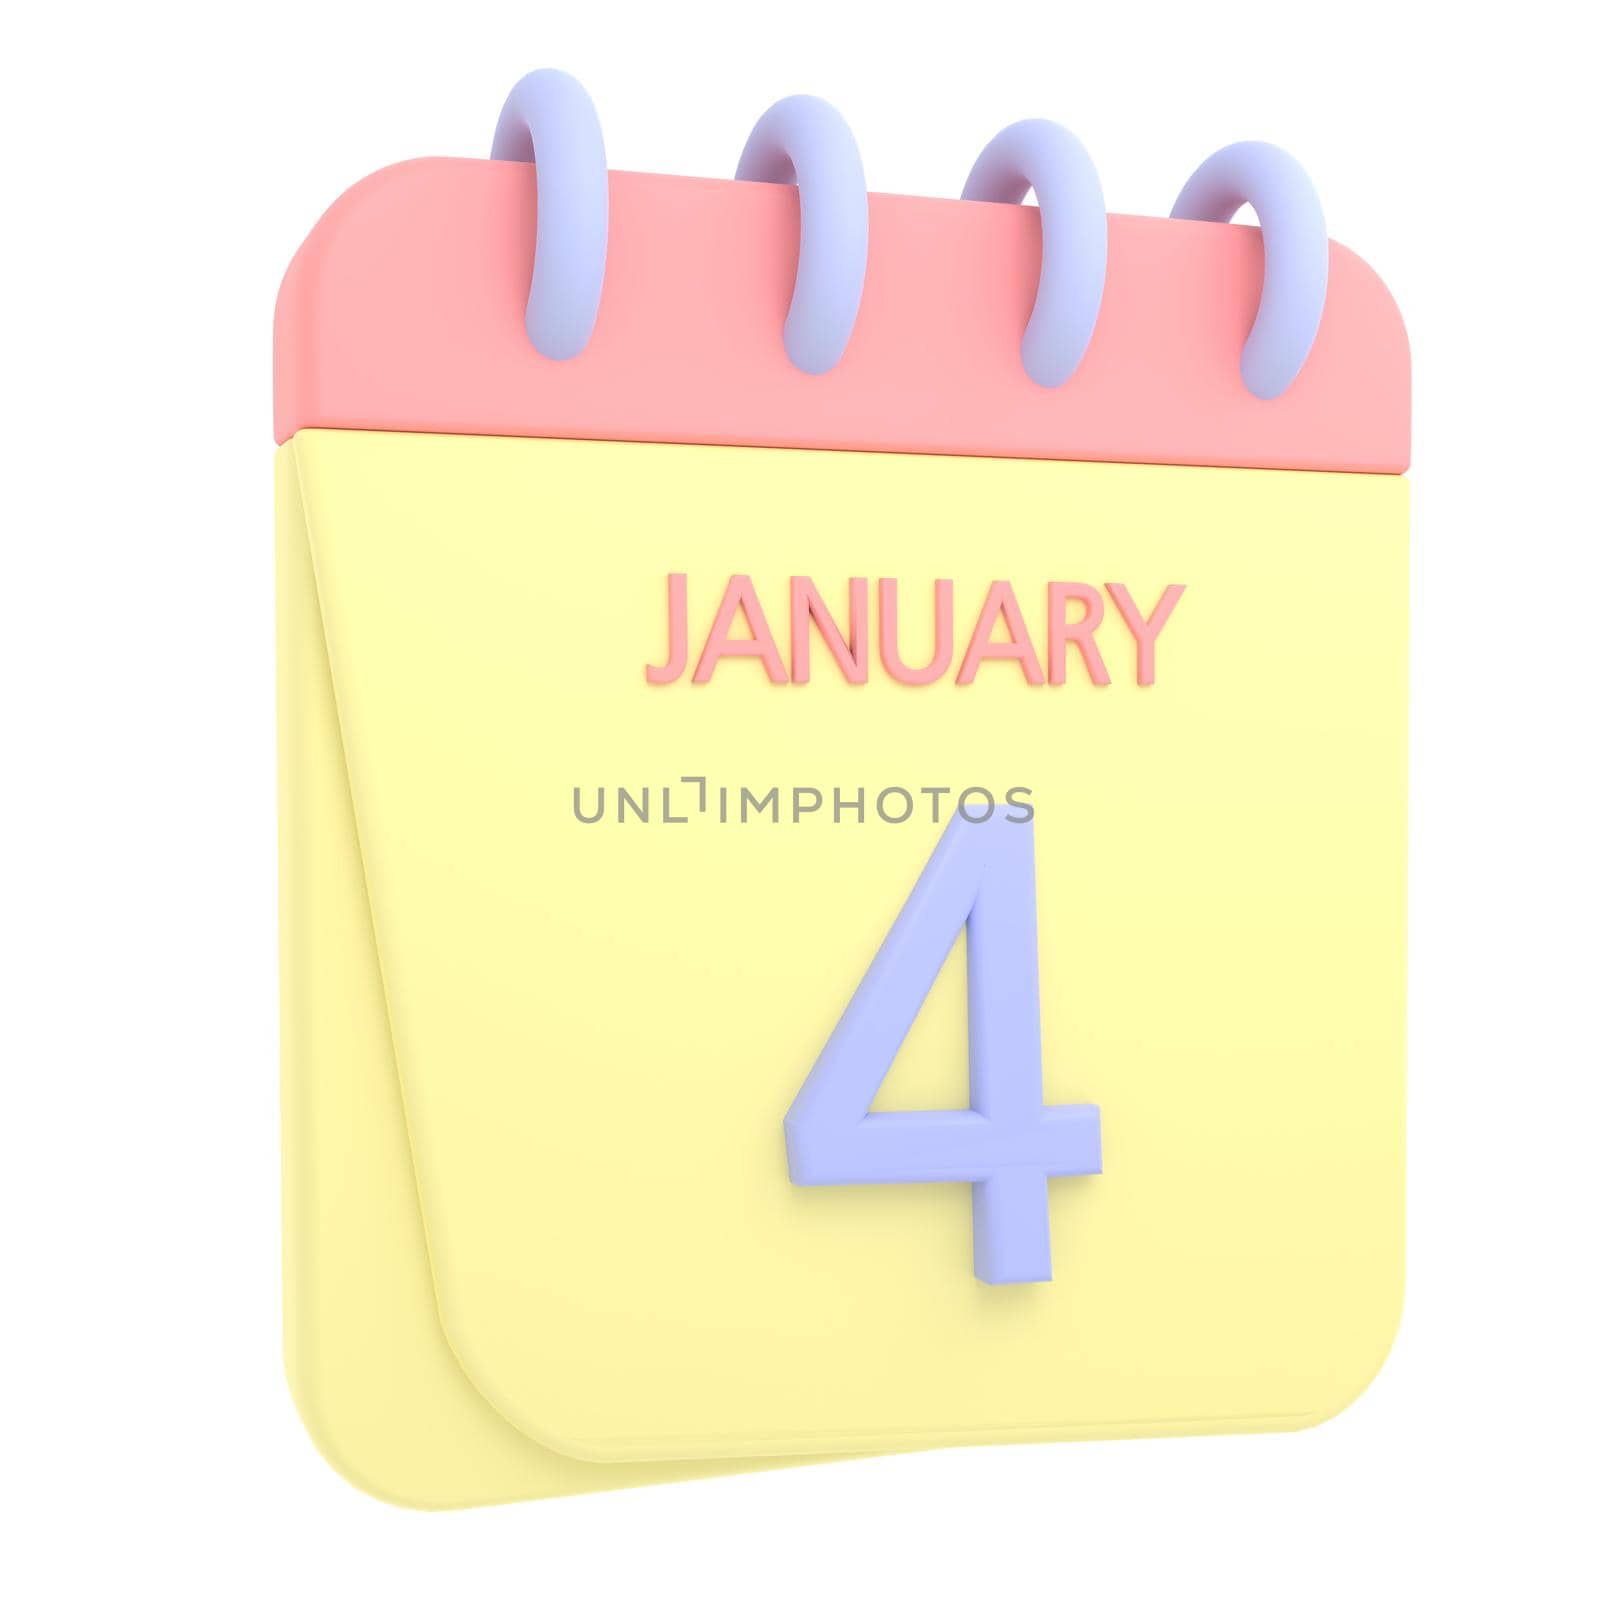 4th January 3D calendar icon by AnnaMarin